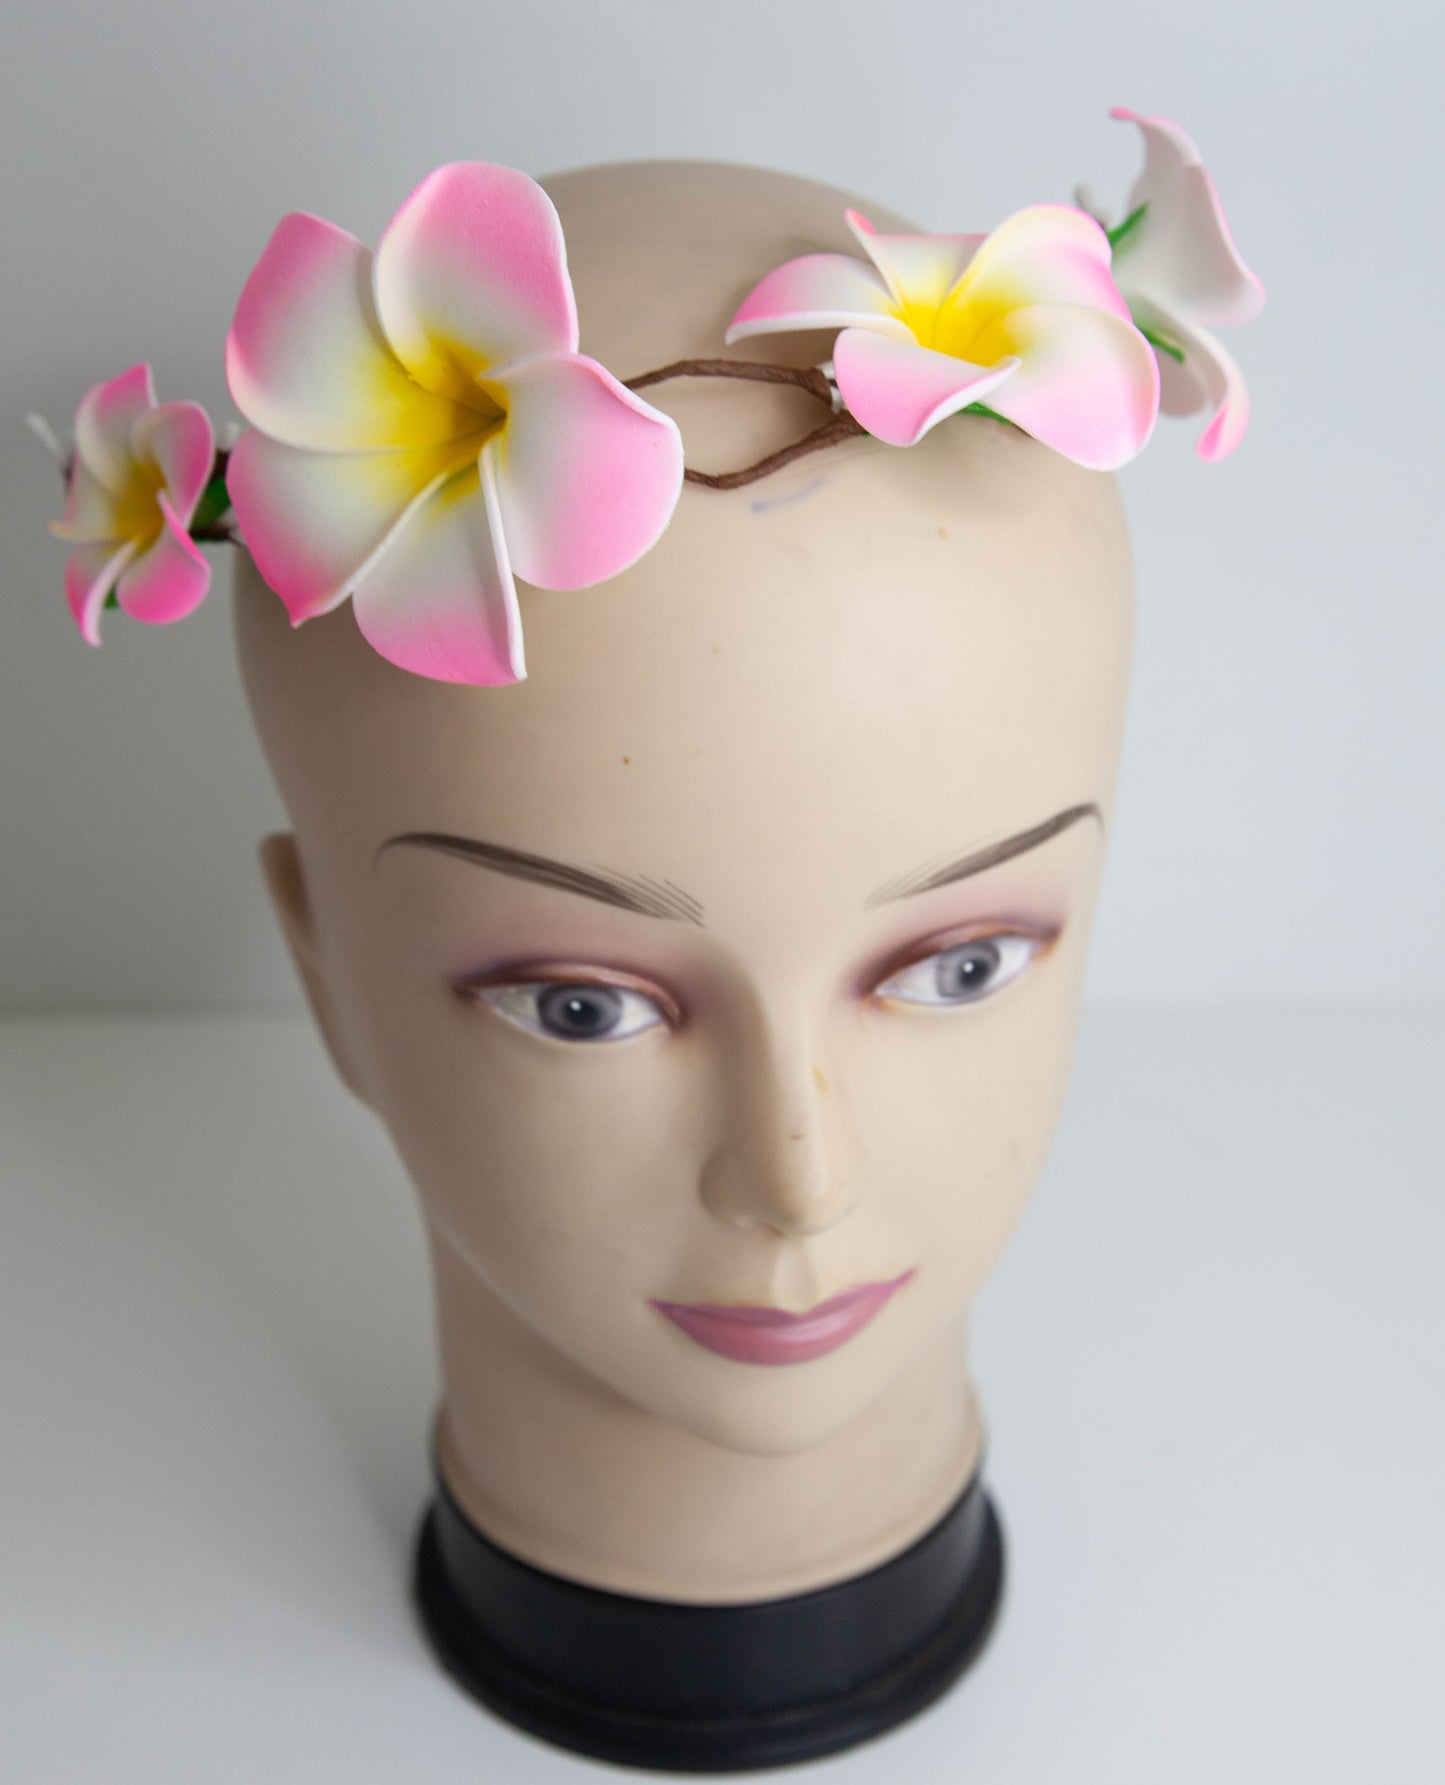 Flower Headbands